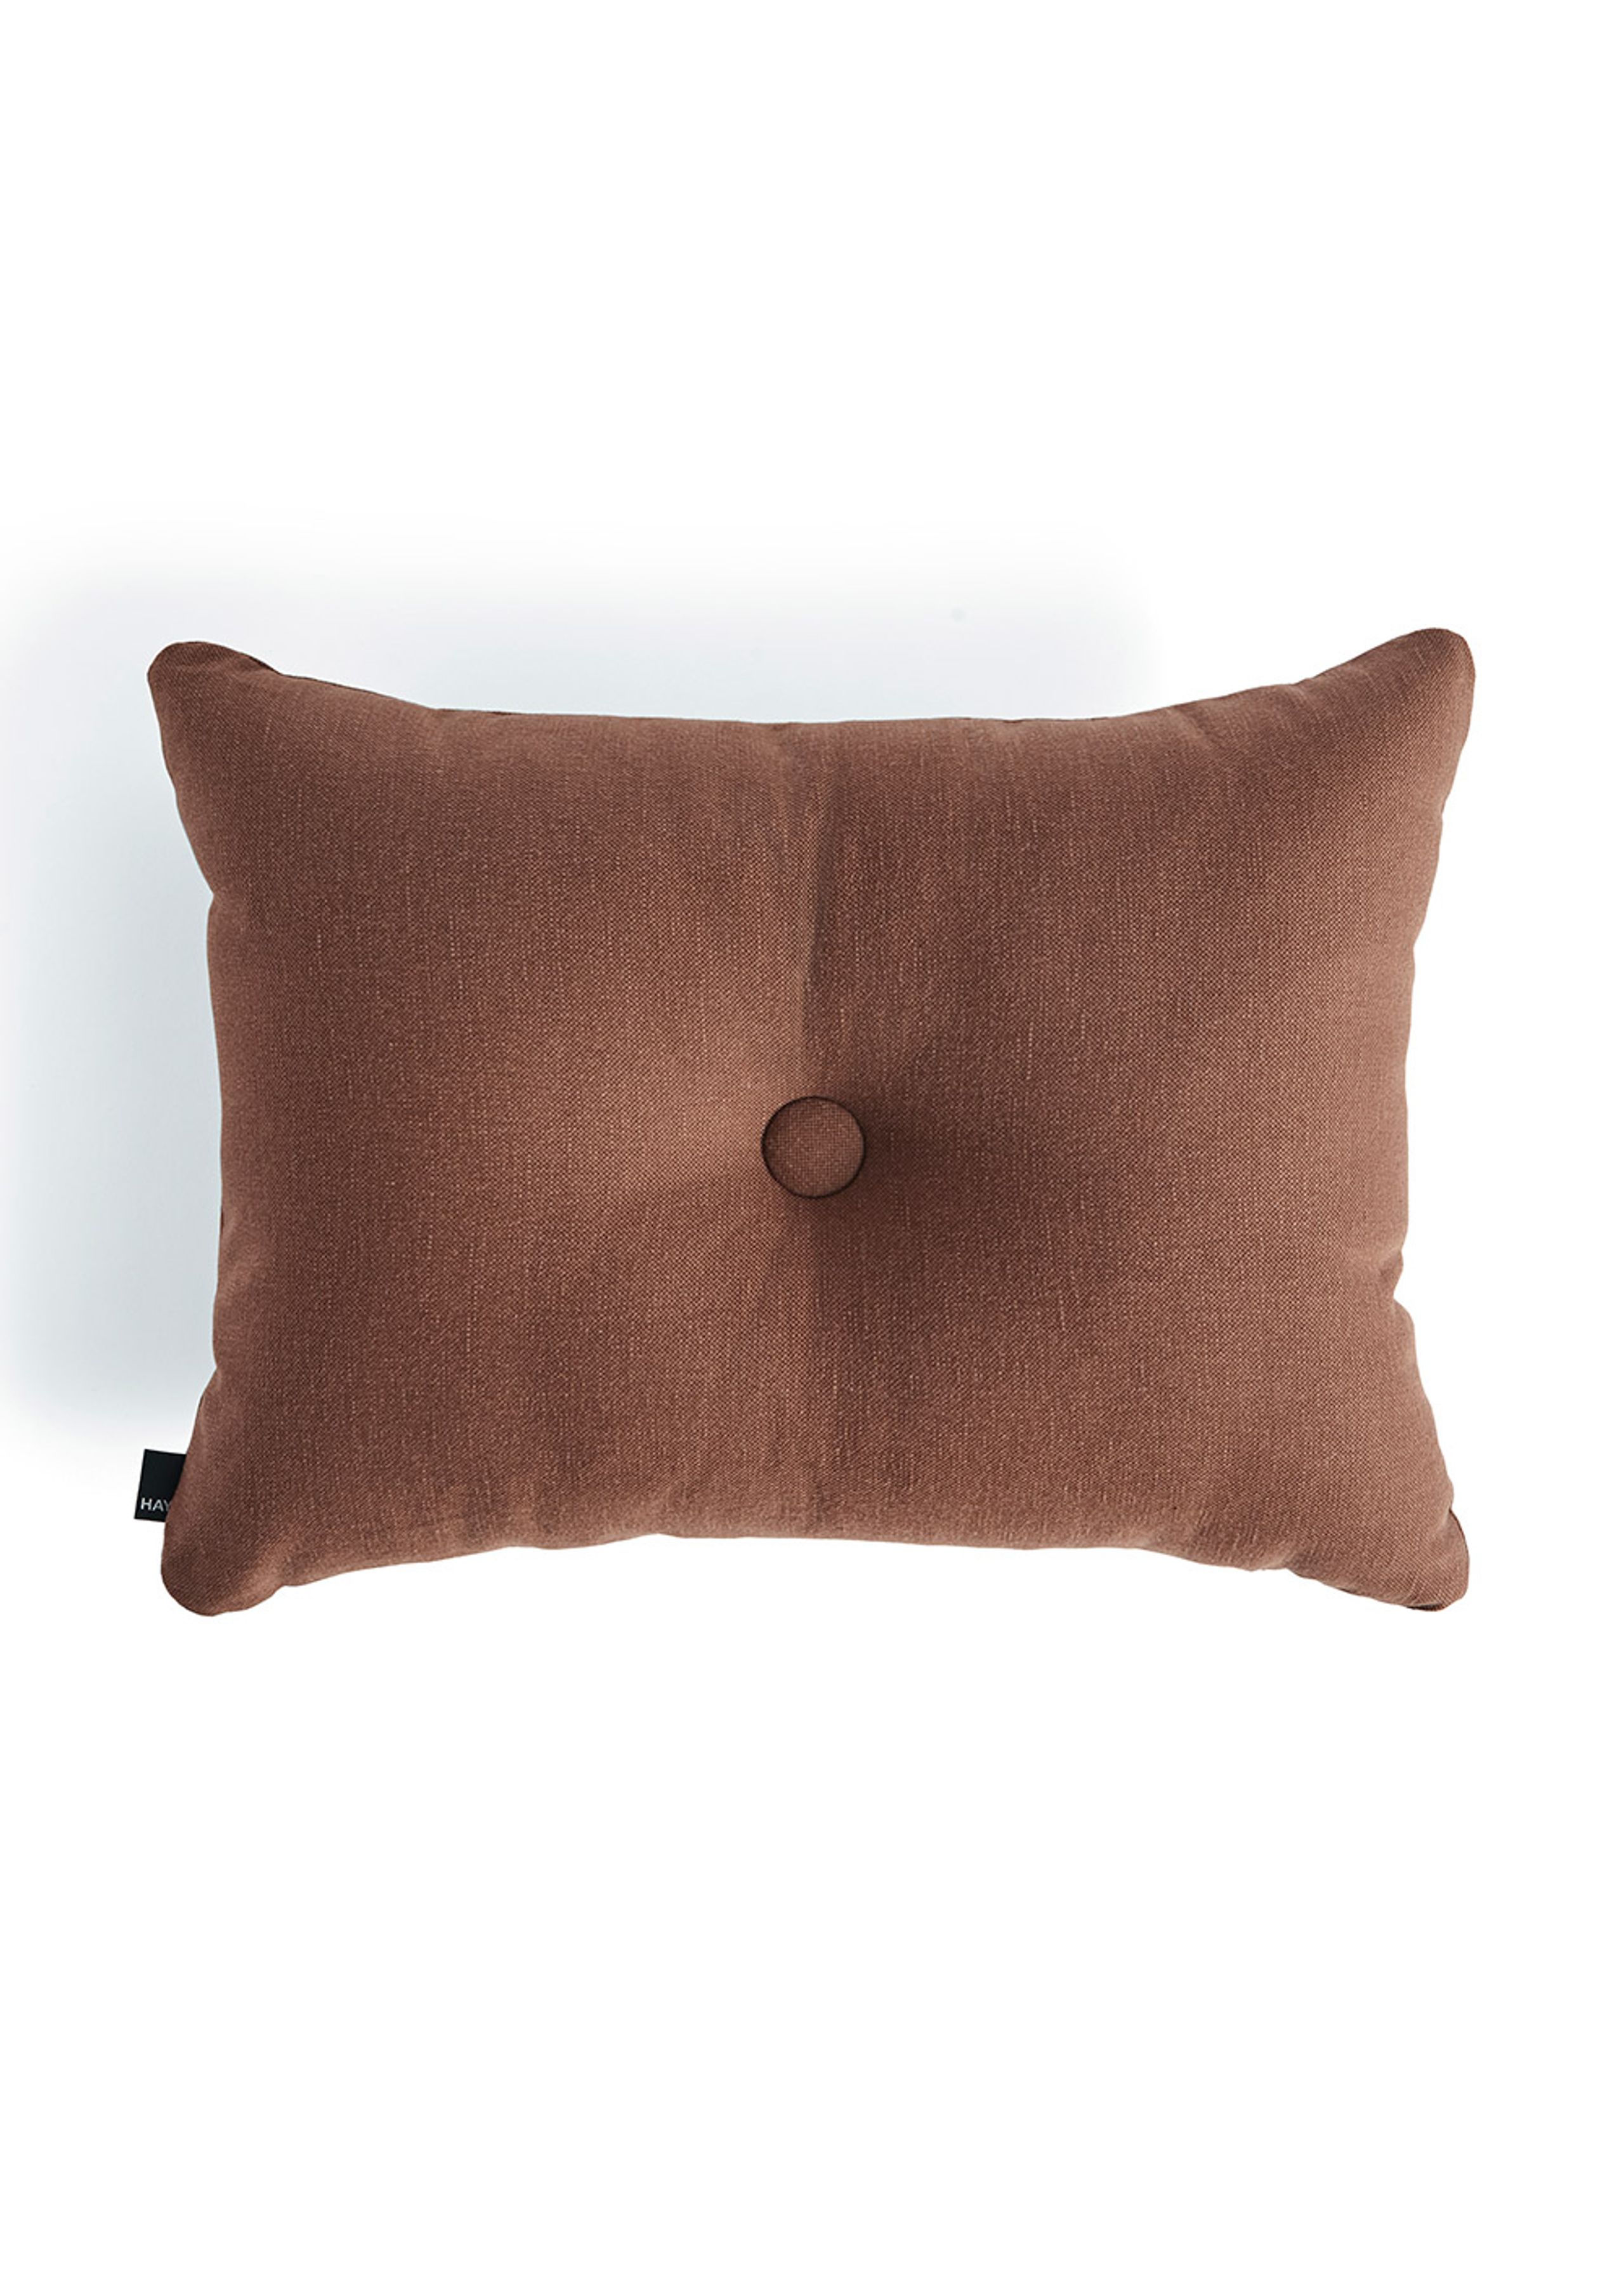 HAY - Pillow - DOT Cushion / Planar - Chocolate